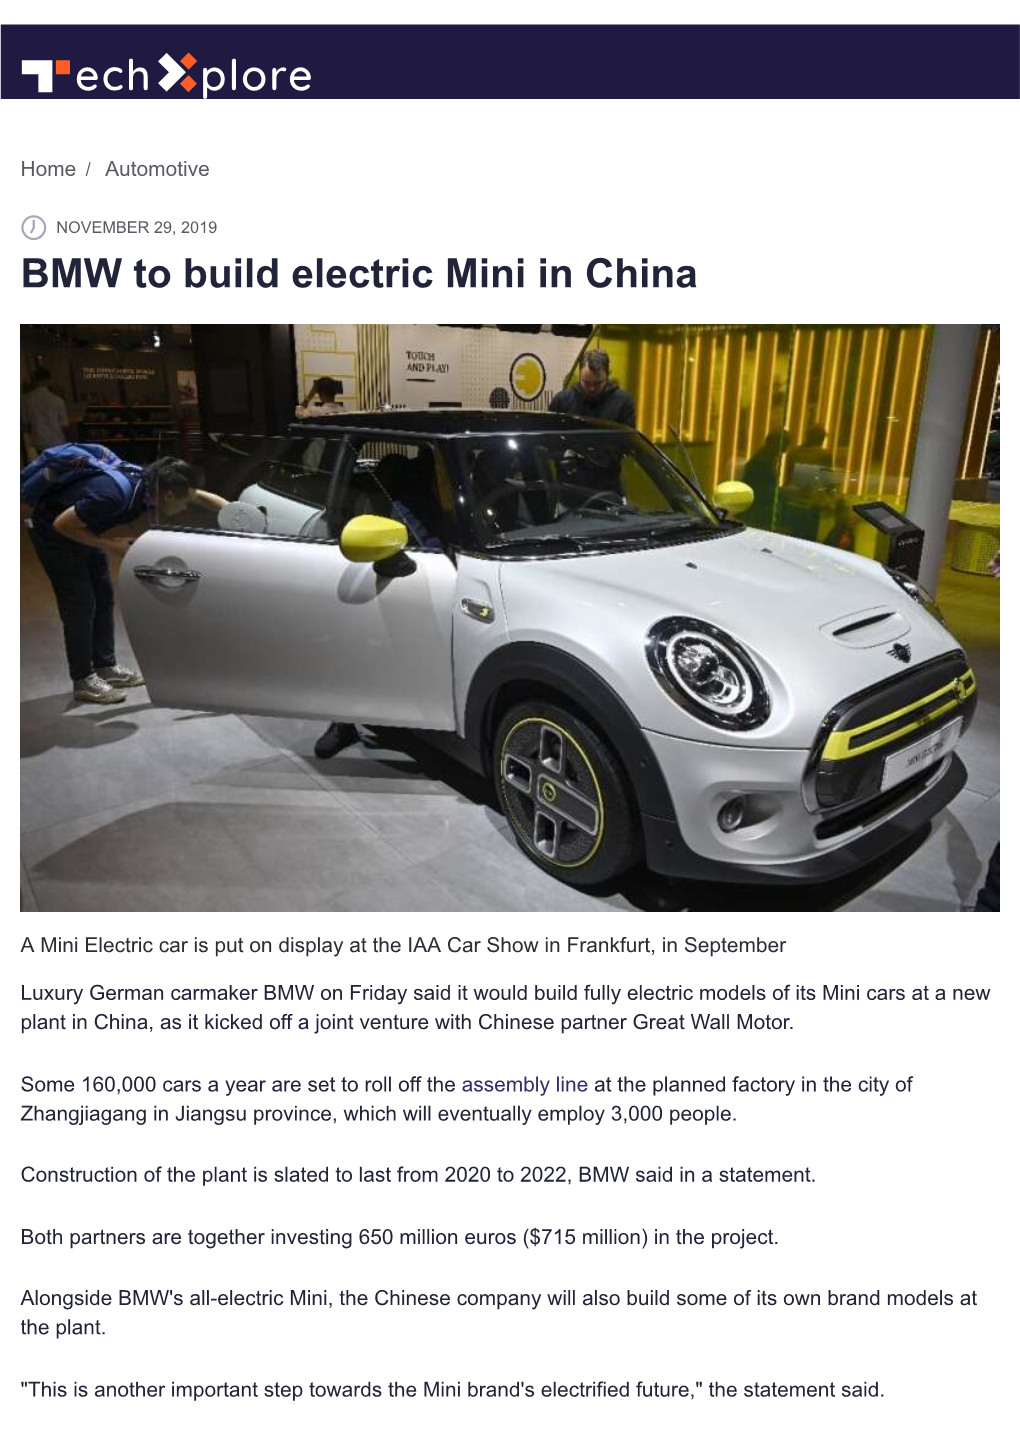 BMW to Build Electric Mini in China